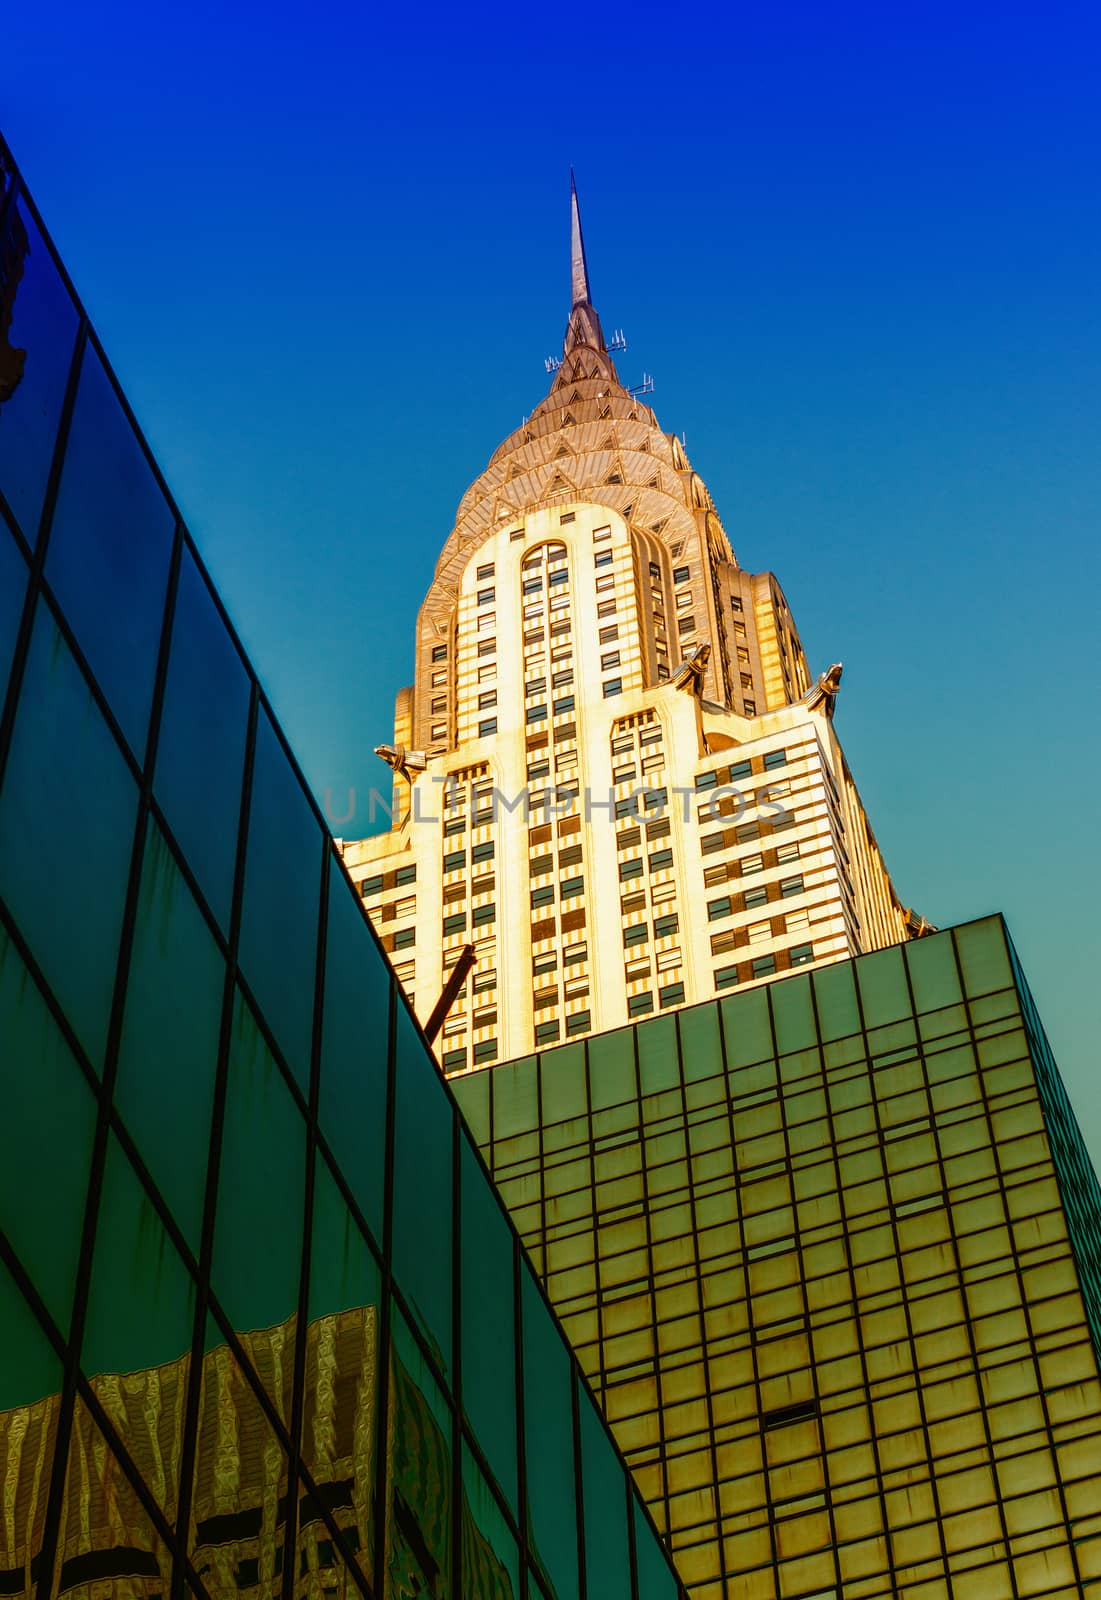 NEW YORK - JUNE 11: Chrysler building facade as seen from street by jovannig